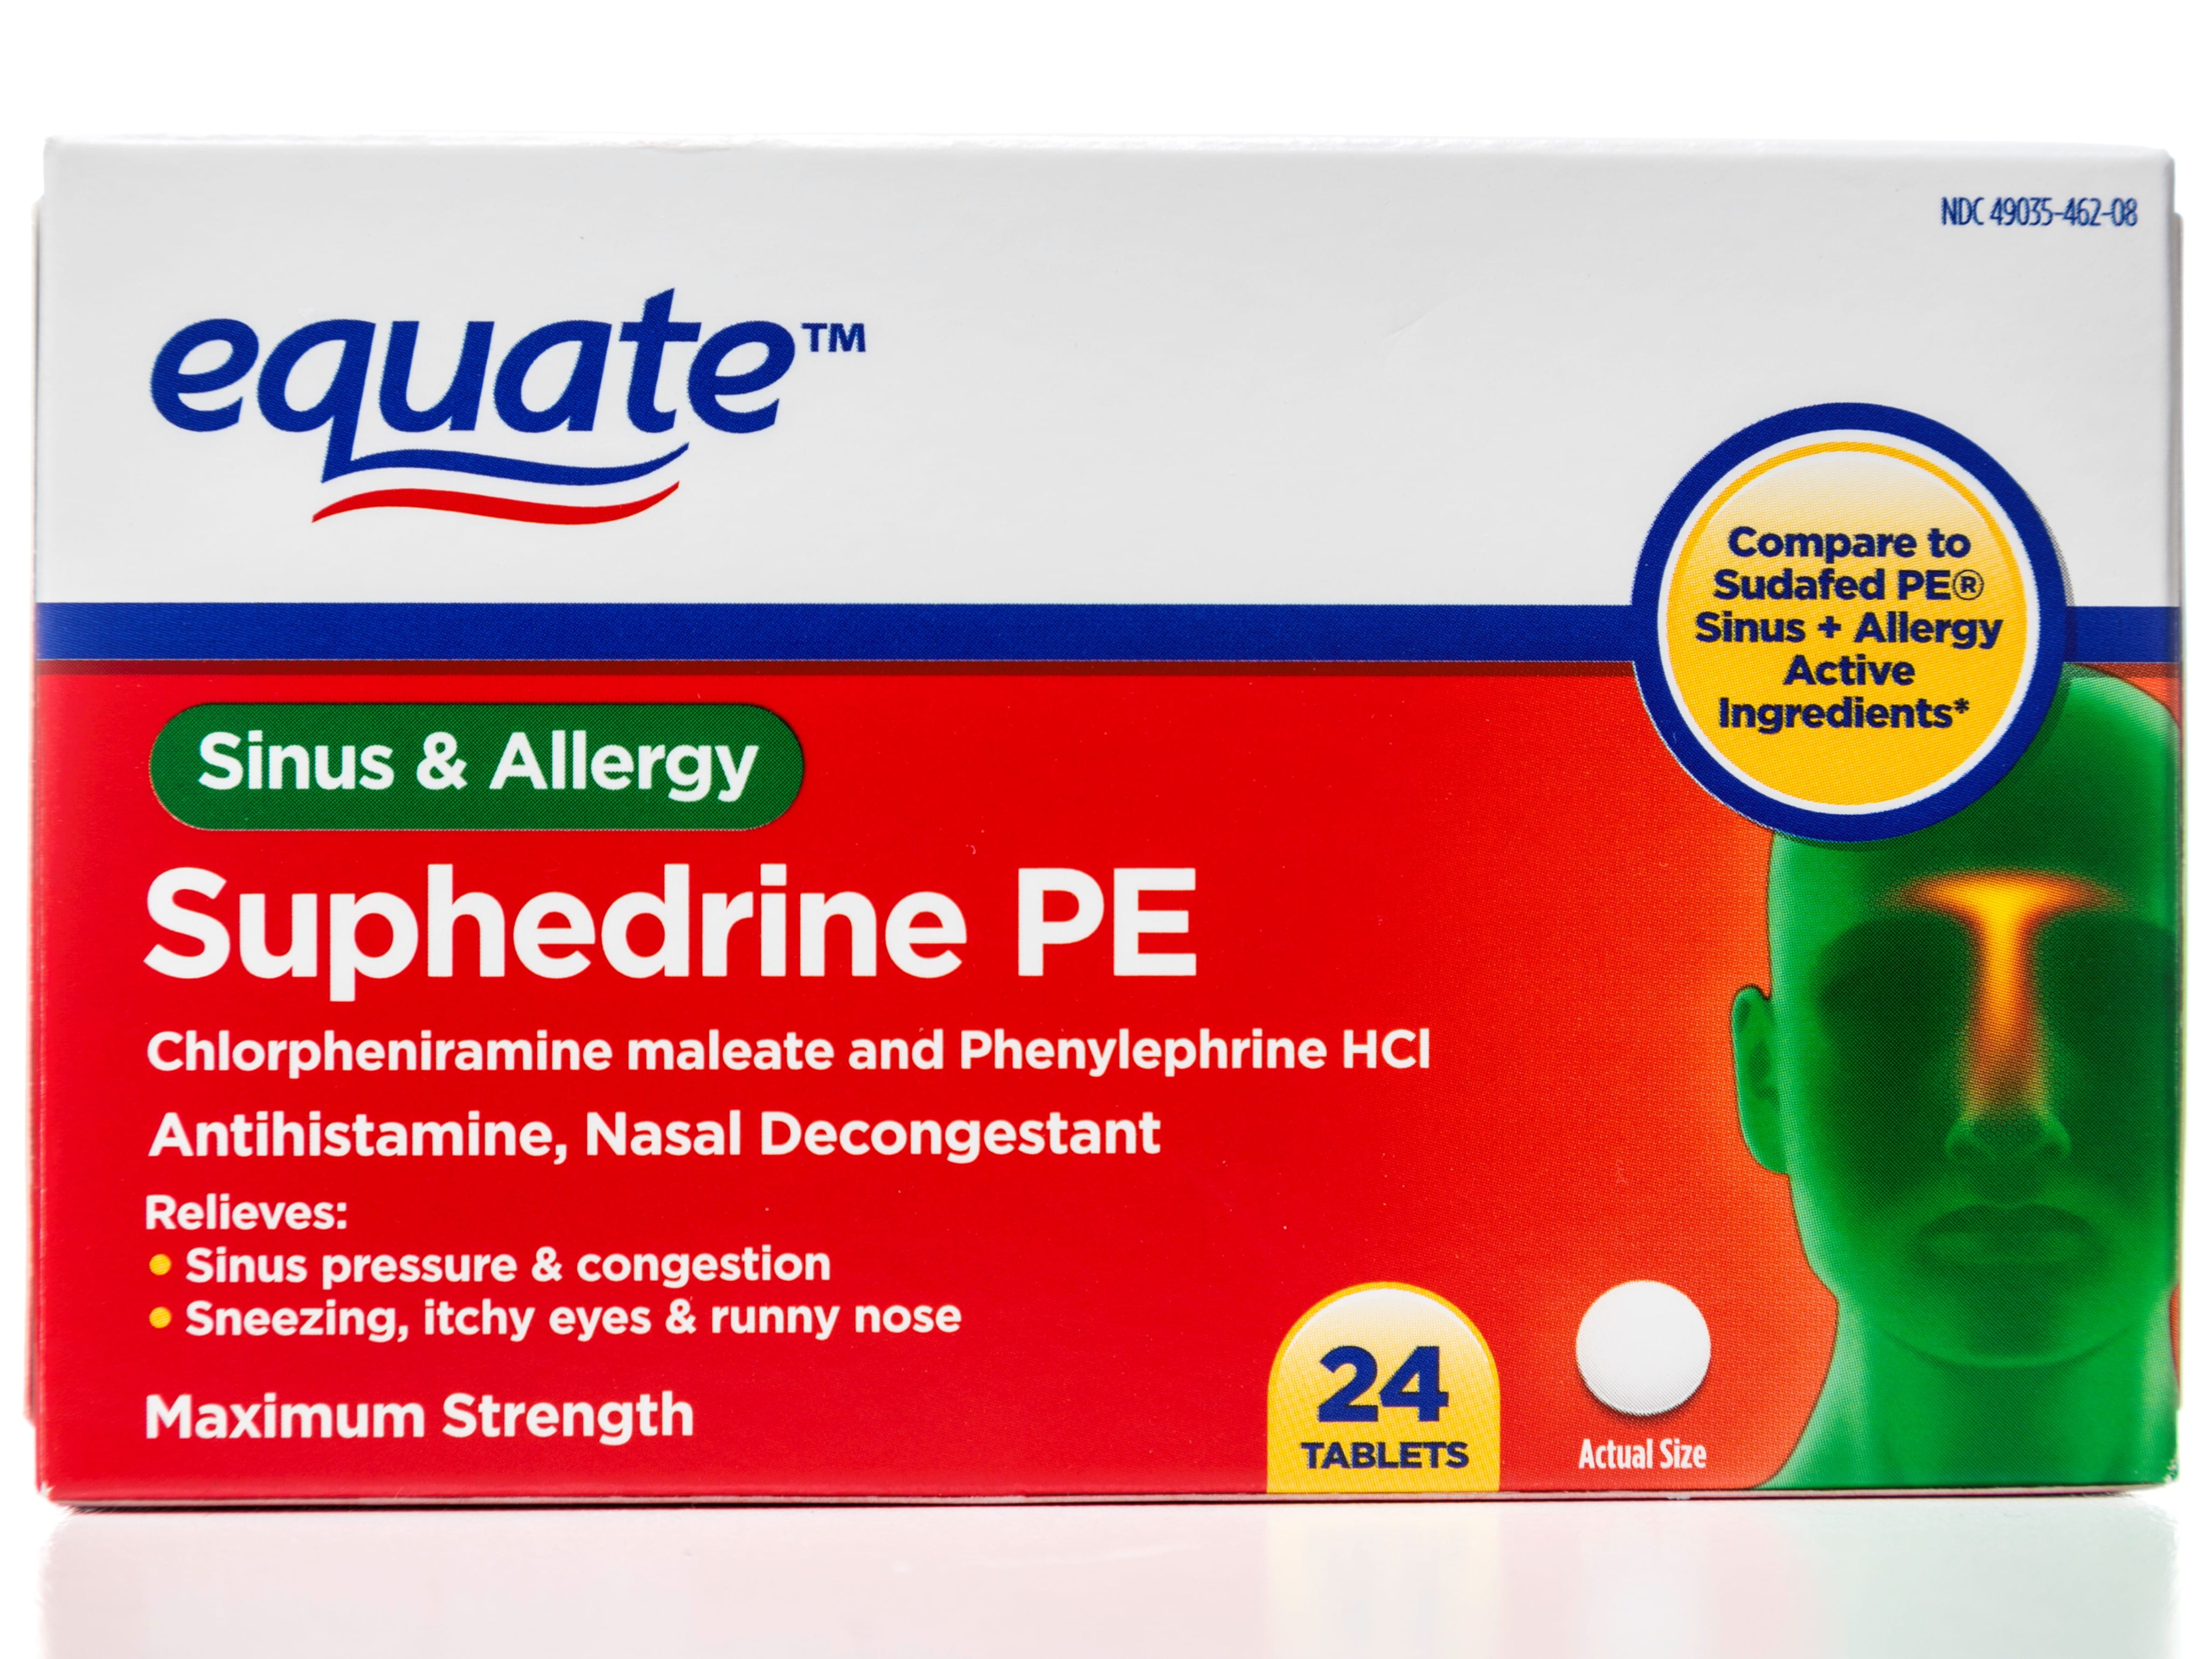 box of Equate Suphedrine PE